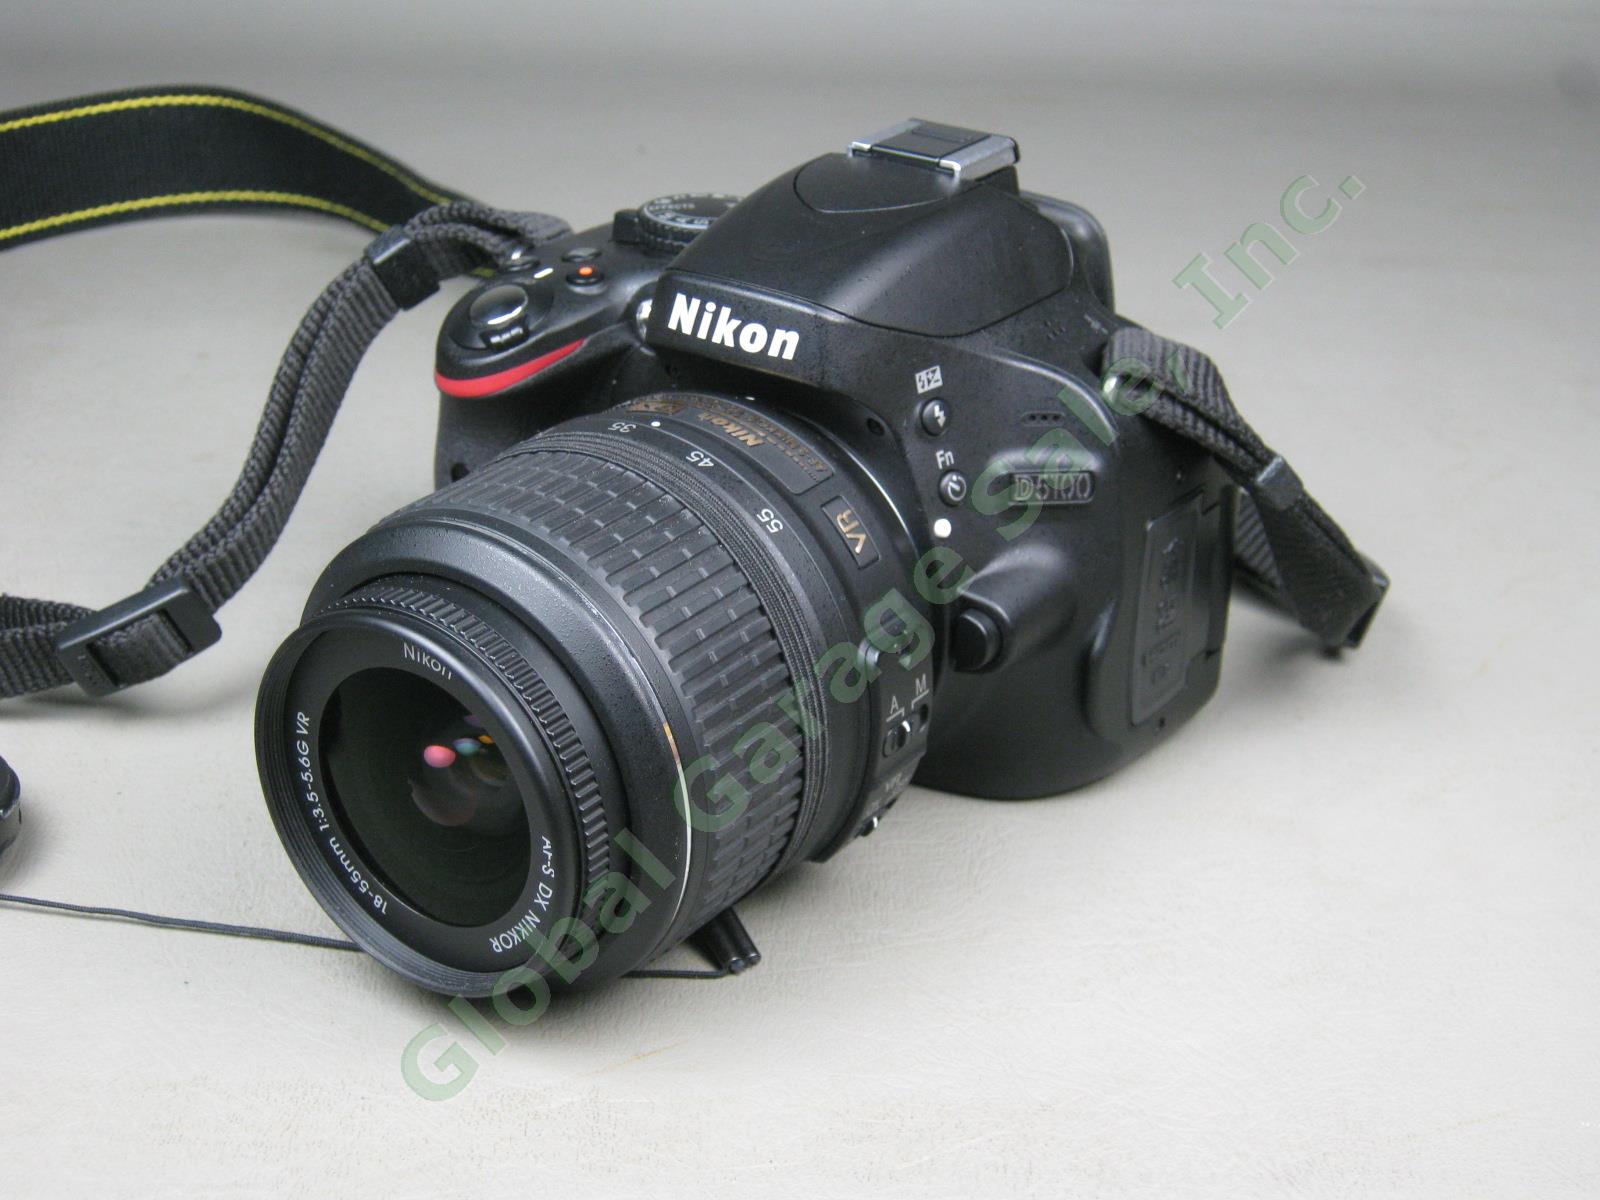 Nikon D5100 DSLR DX 18-55 VR Digital Camera Kit 2GB Manfrotto Bag Tripod Bundle 2